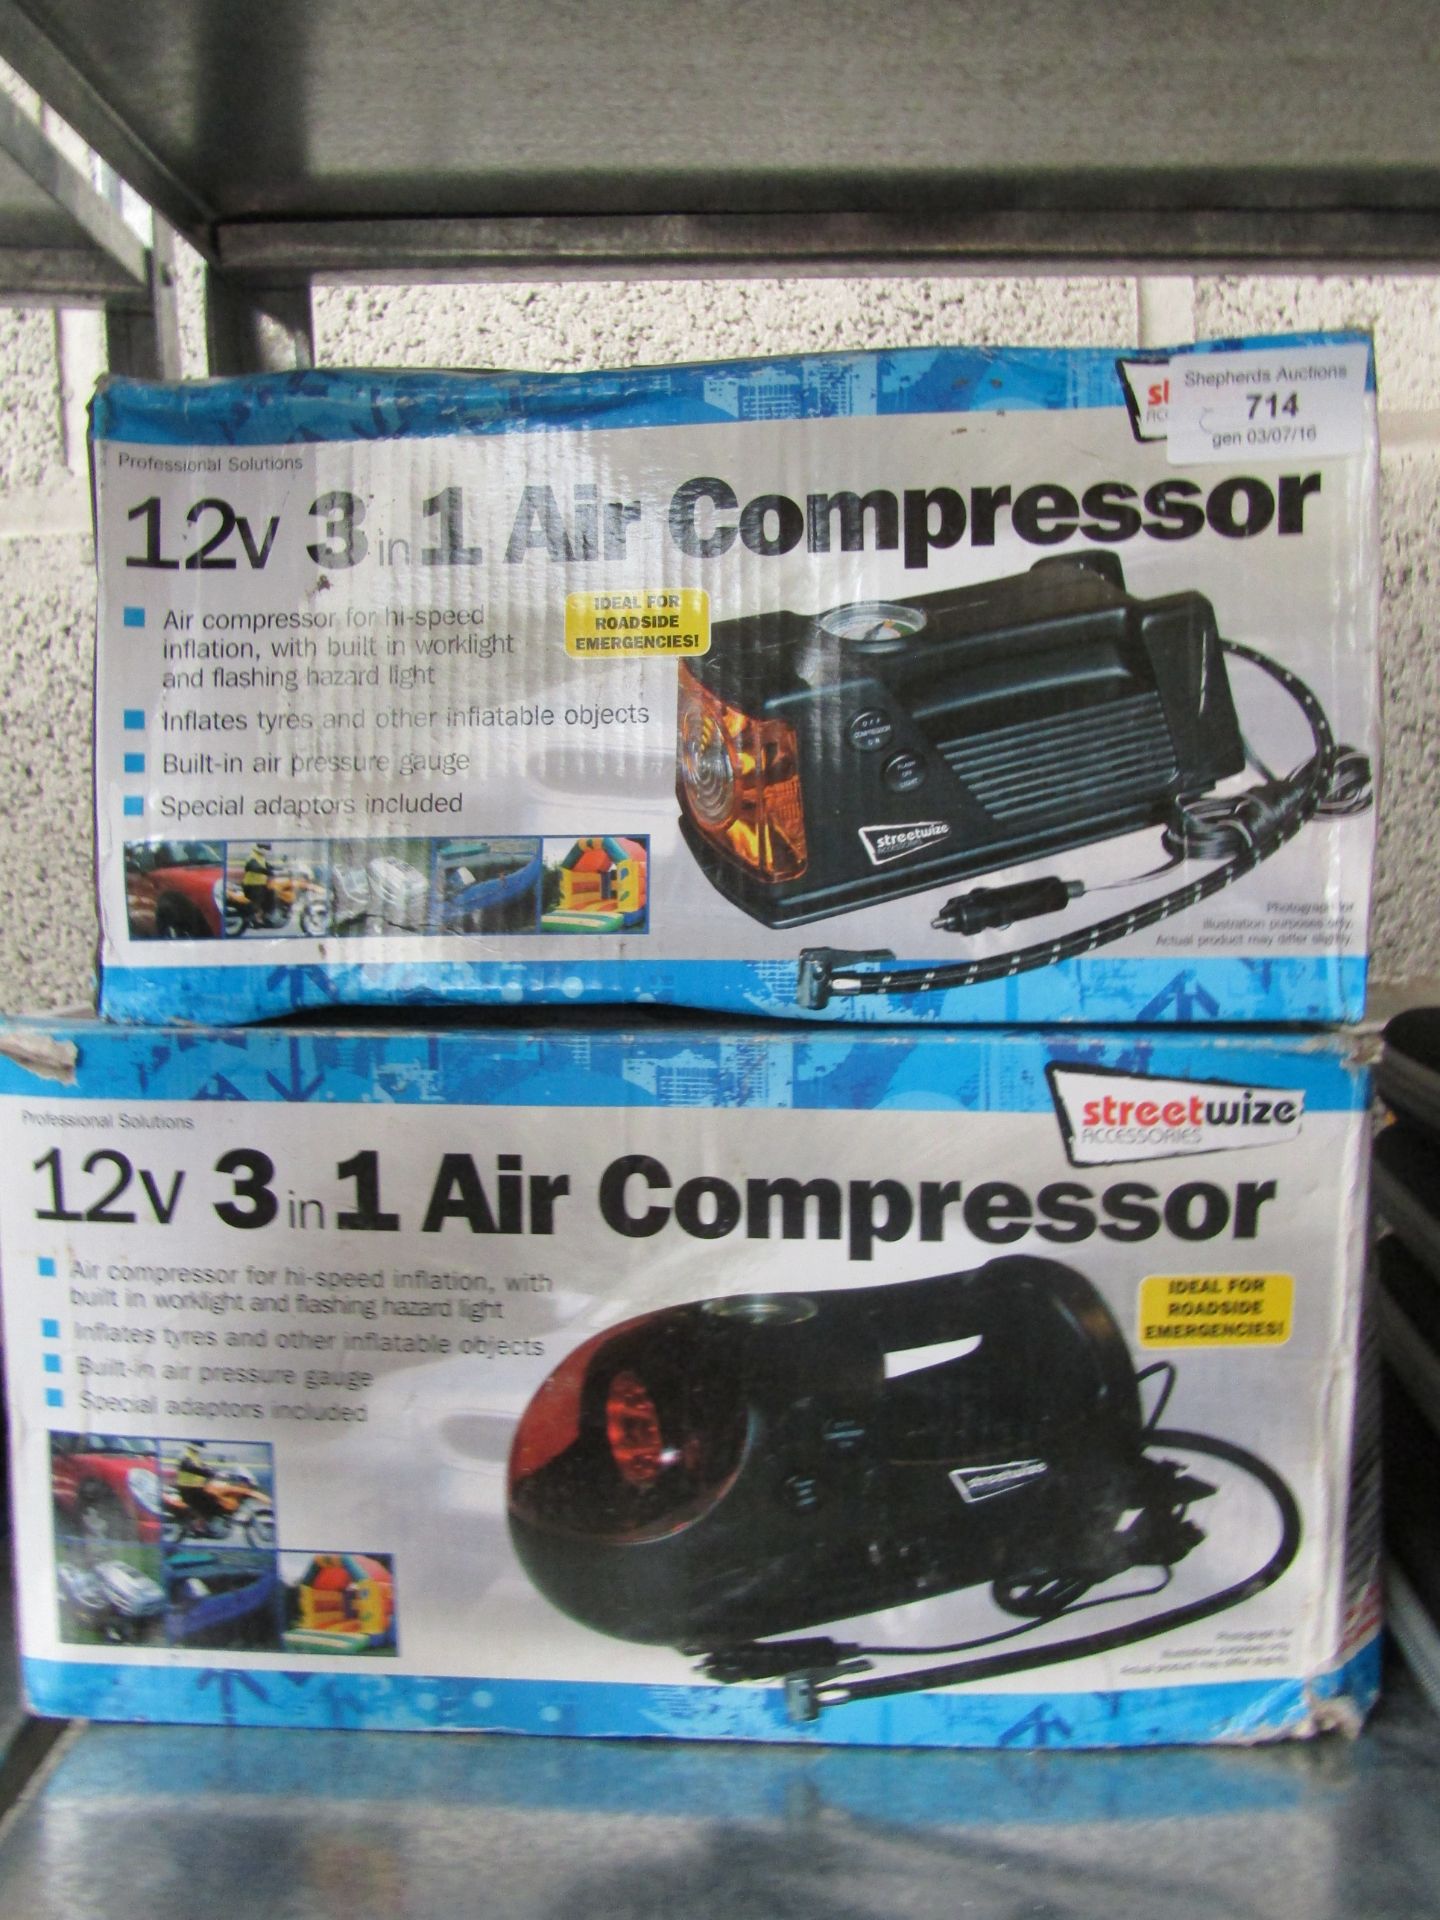 2x StreetWize 12V 3 in 1 Air Compressor. Boxed.